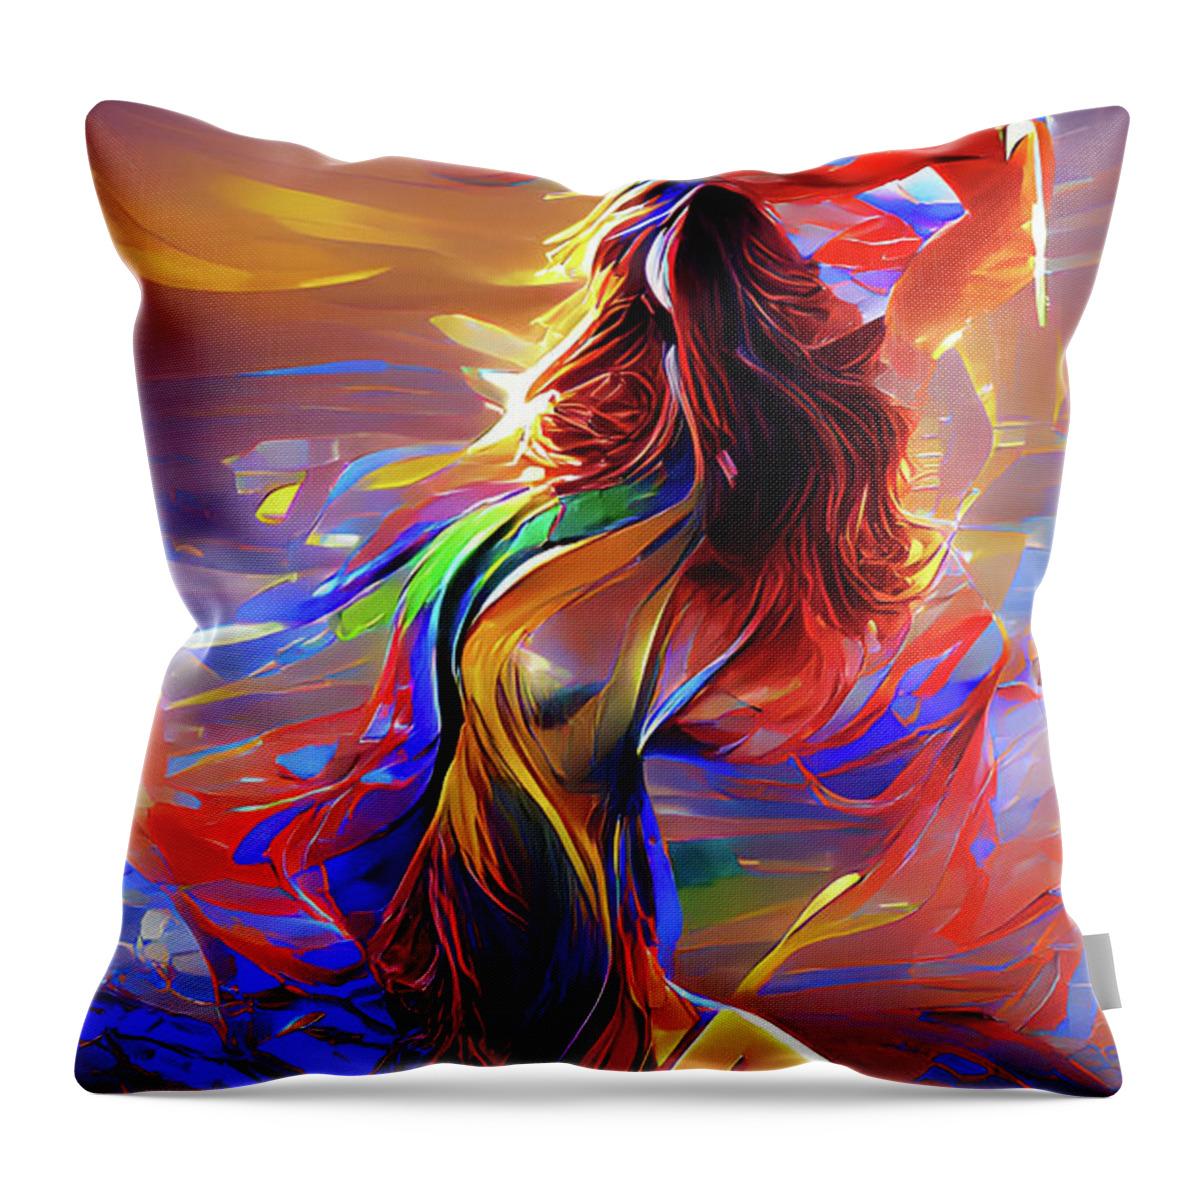 Woman Throw Pillow featuring the digital art Melting Woman by Digital Art Cafe